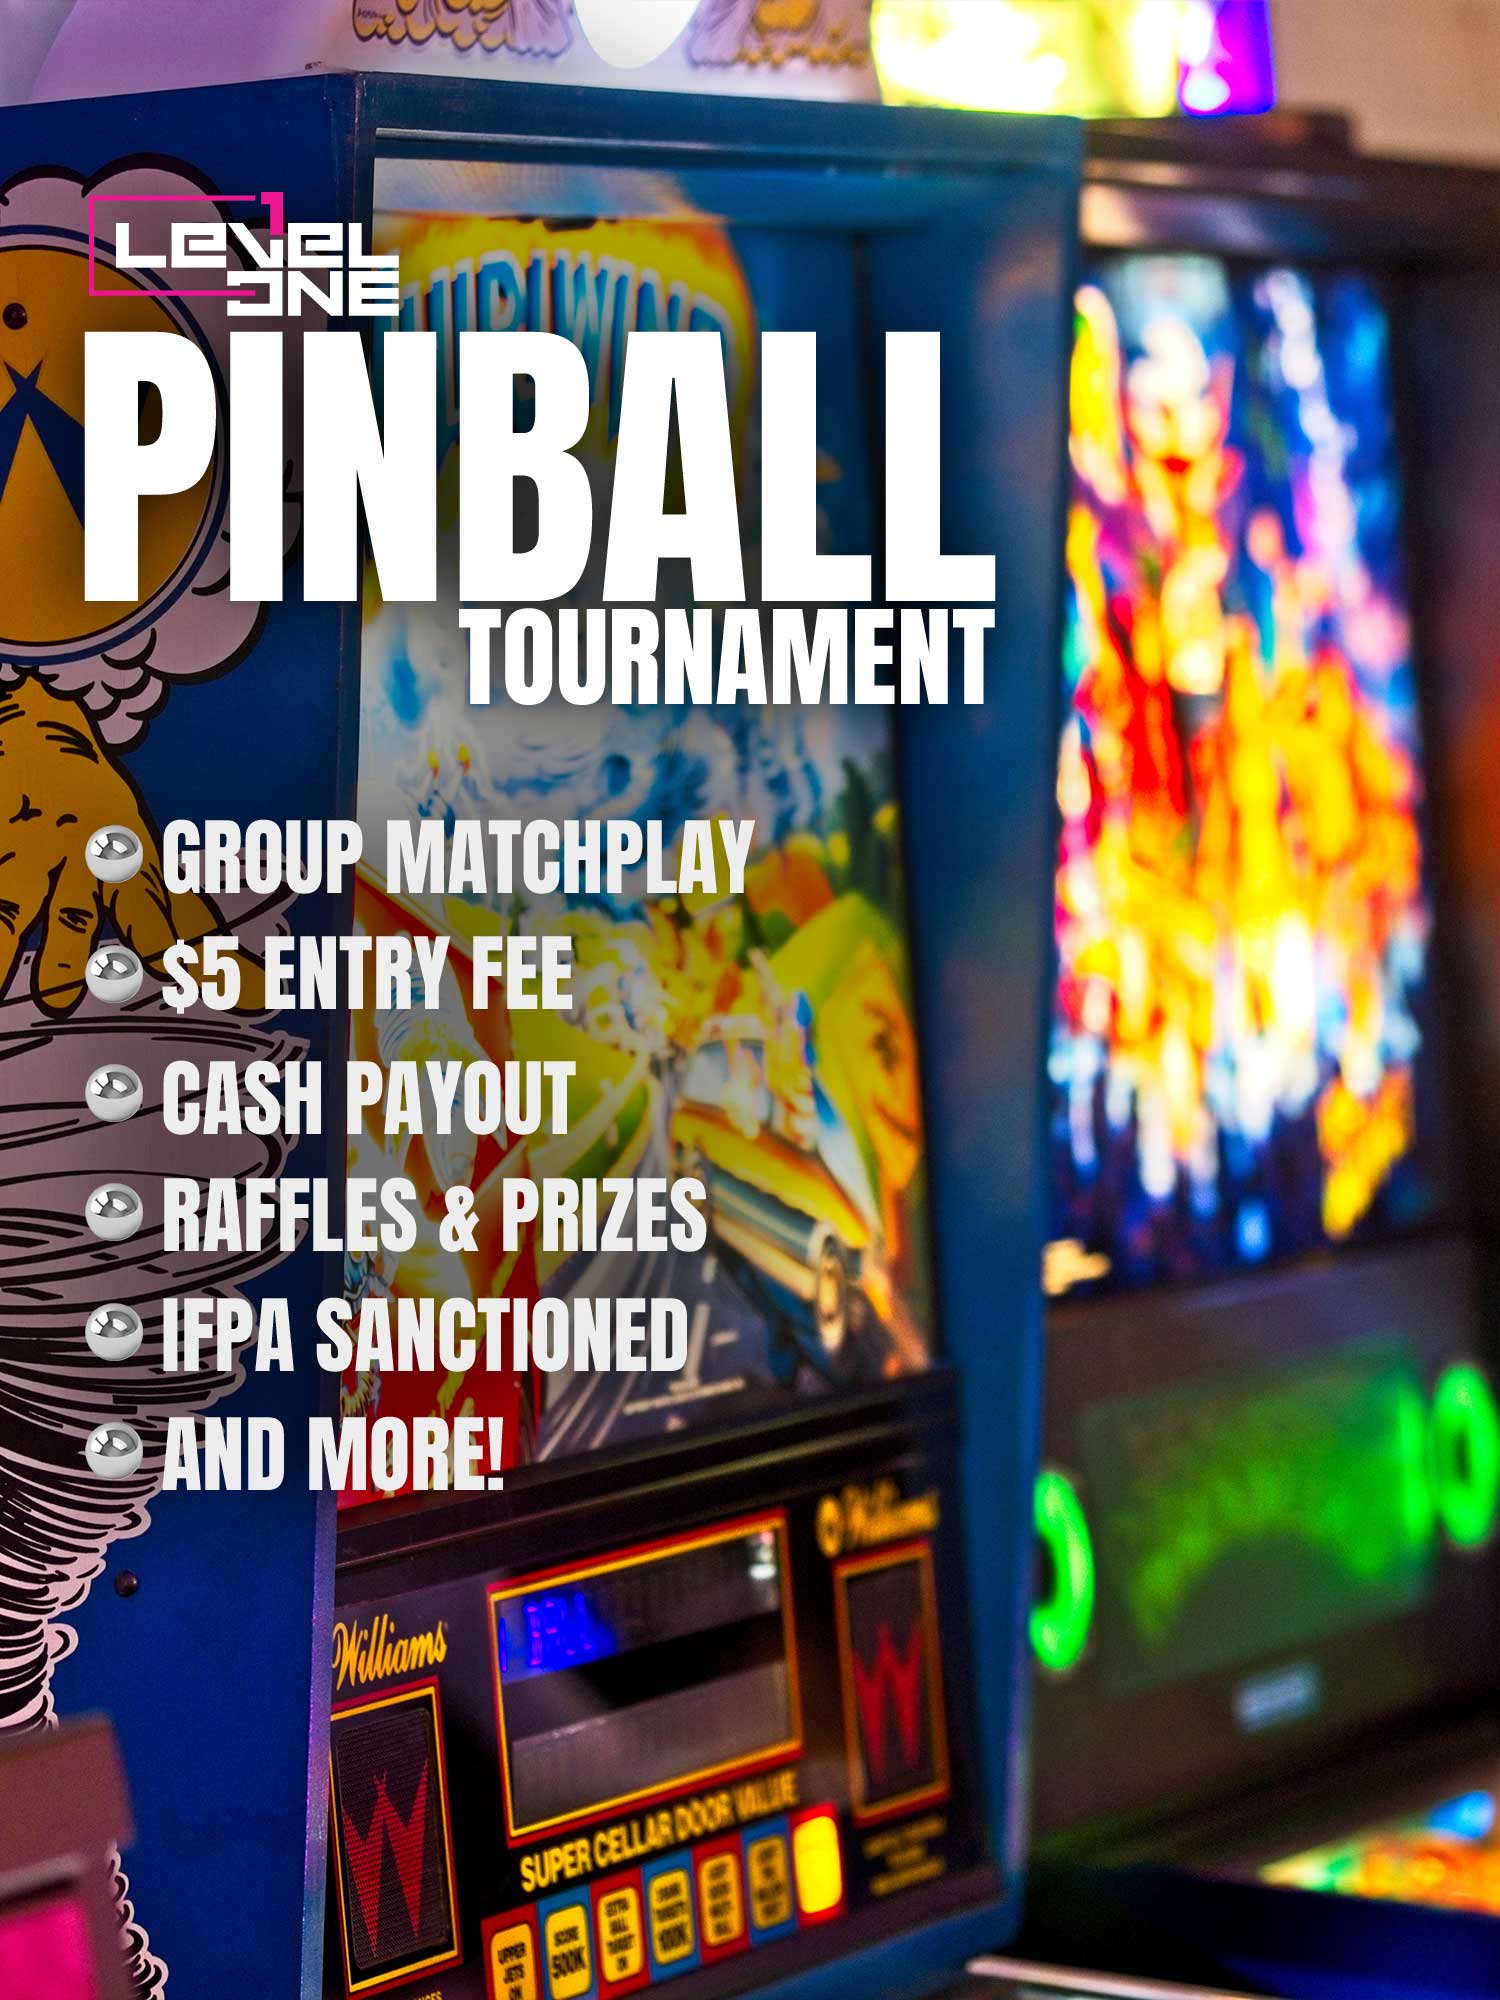 Level 1 Arcade Bar Pinball Tournament